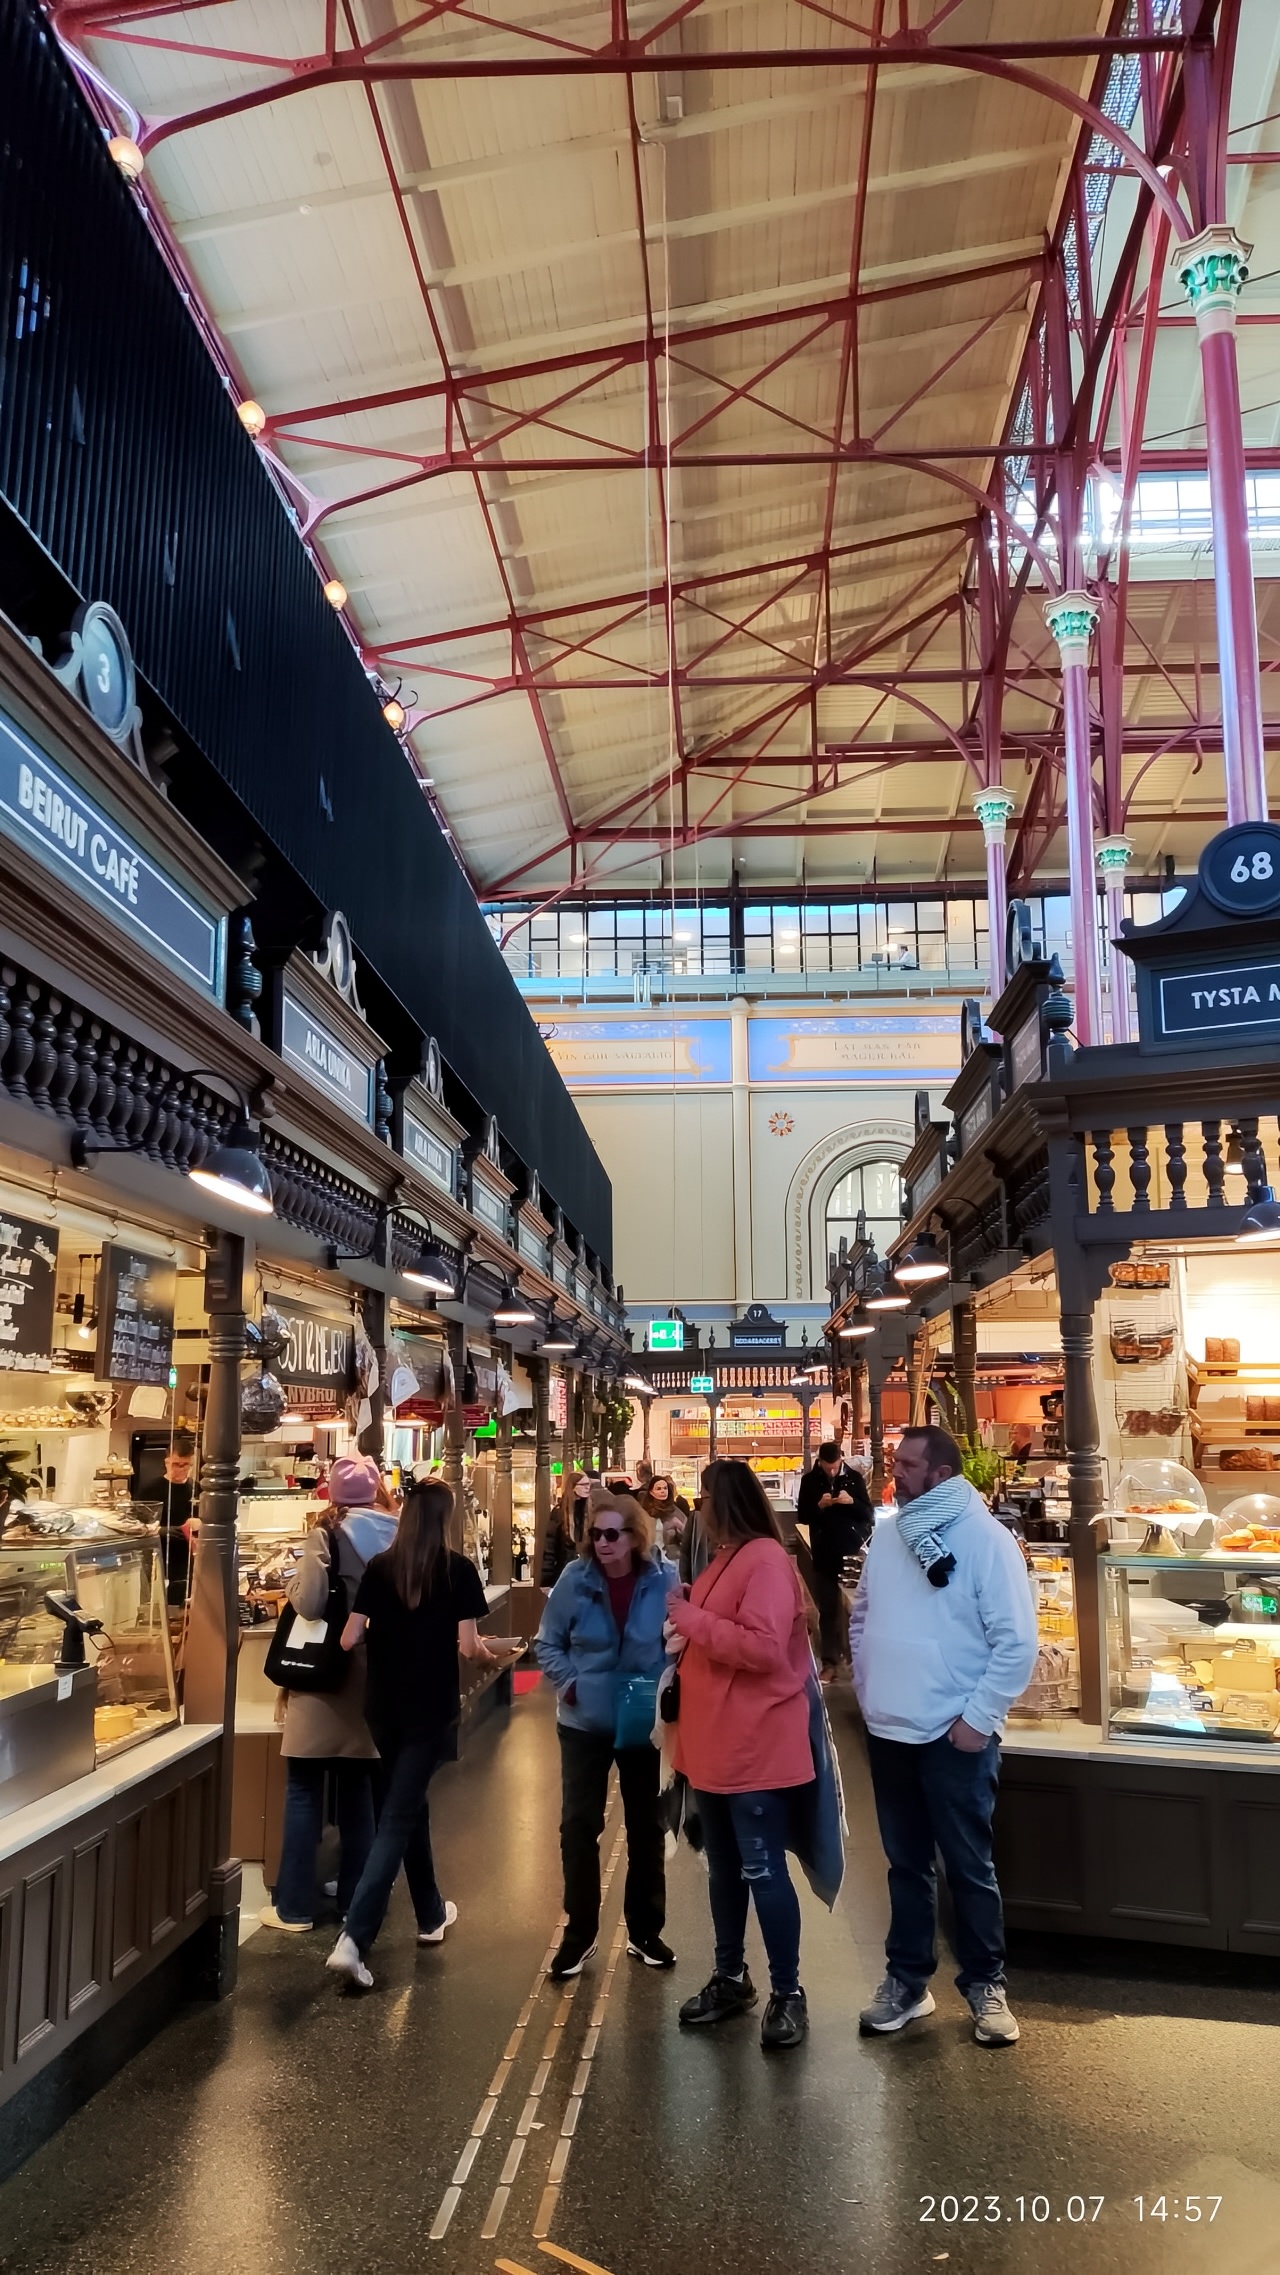 Ostermalms Food Hall是位于斯德哥尔摩的大型食物商场。里面海鲜等各种食物令人垂涎欲